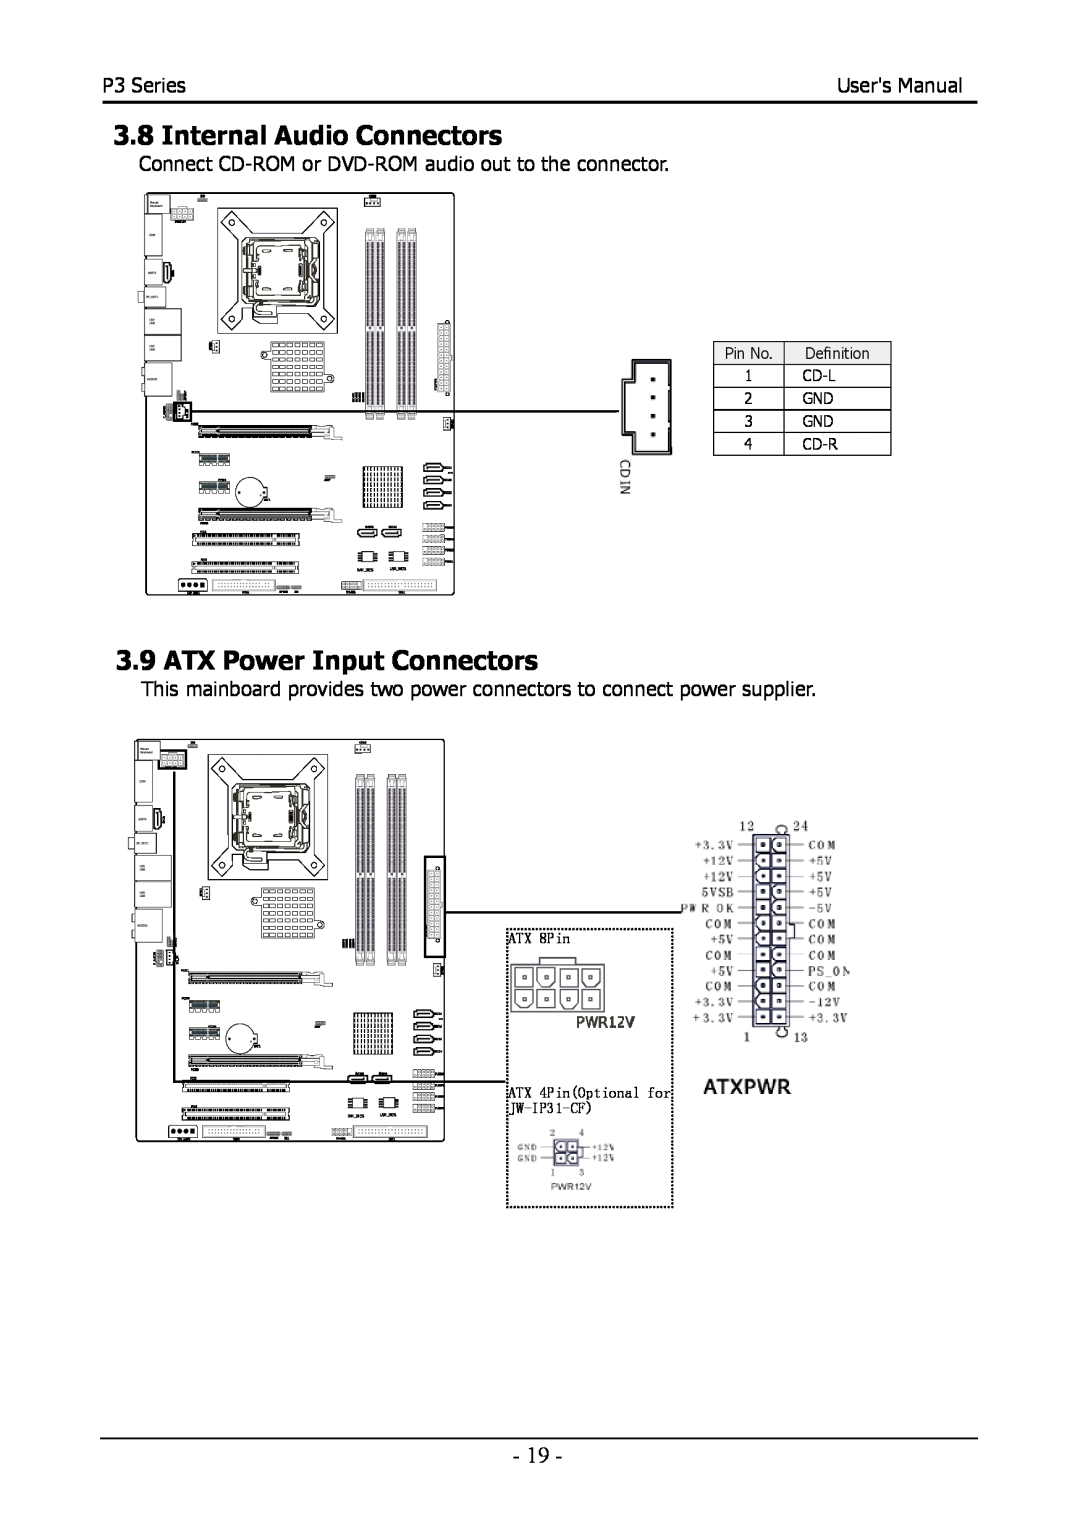 Intel 88ENEP3S00 Internal Audio Connectors, ATX Power Input Connectors, ATX 8Pin, ATX 4PinOptional for JW-IP31-CF 